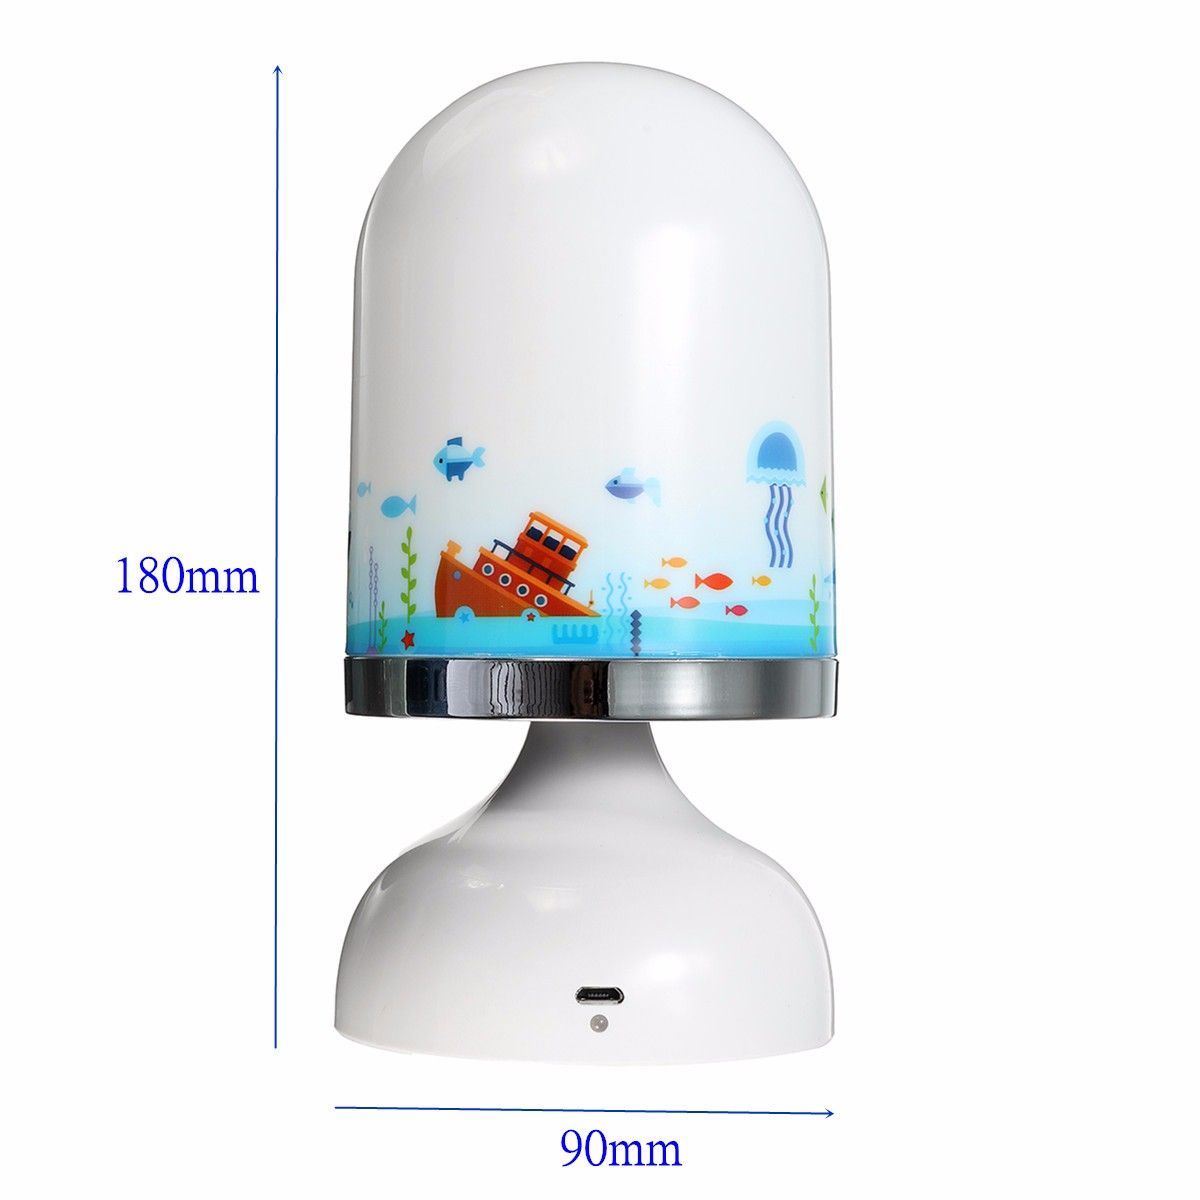 Portable-USB-Rechargeable-LED-Night-Light-Hanging-Stand-Table-Vibration-Sensor-Lamp-1085102